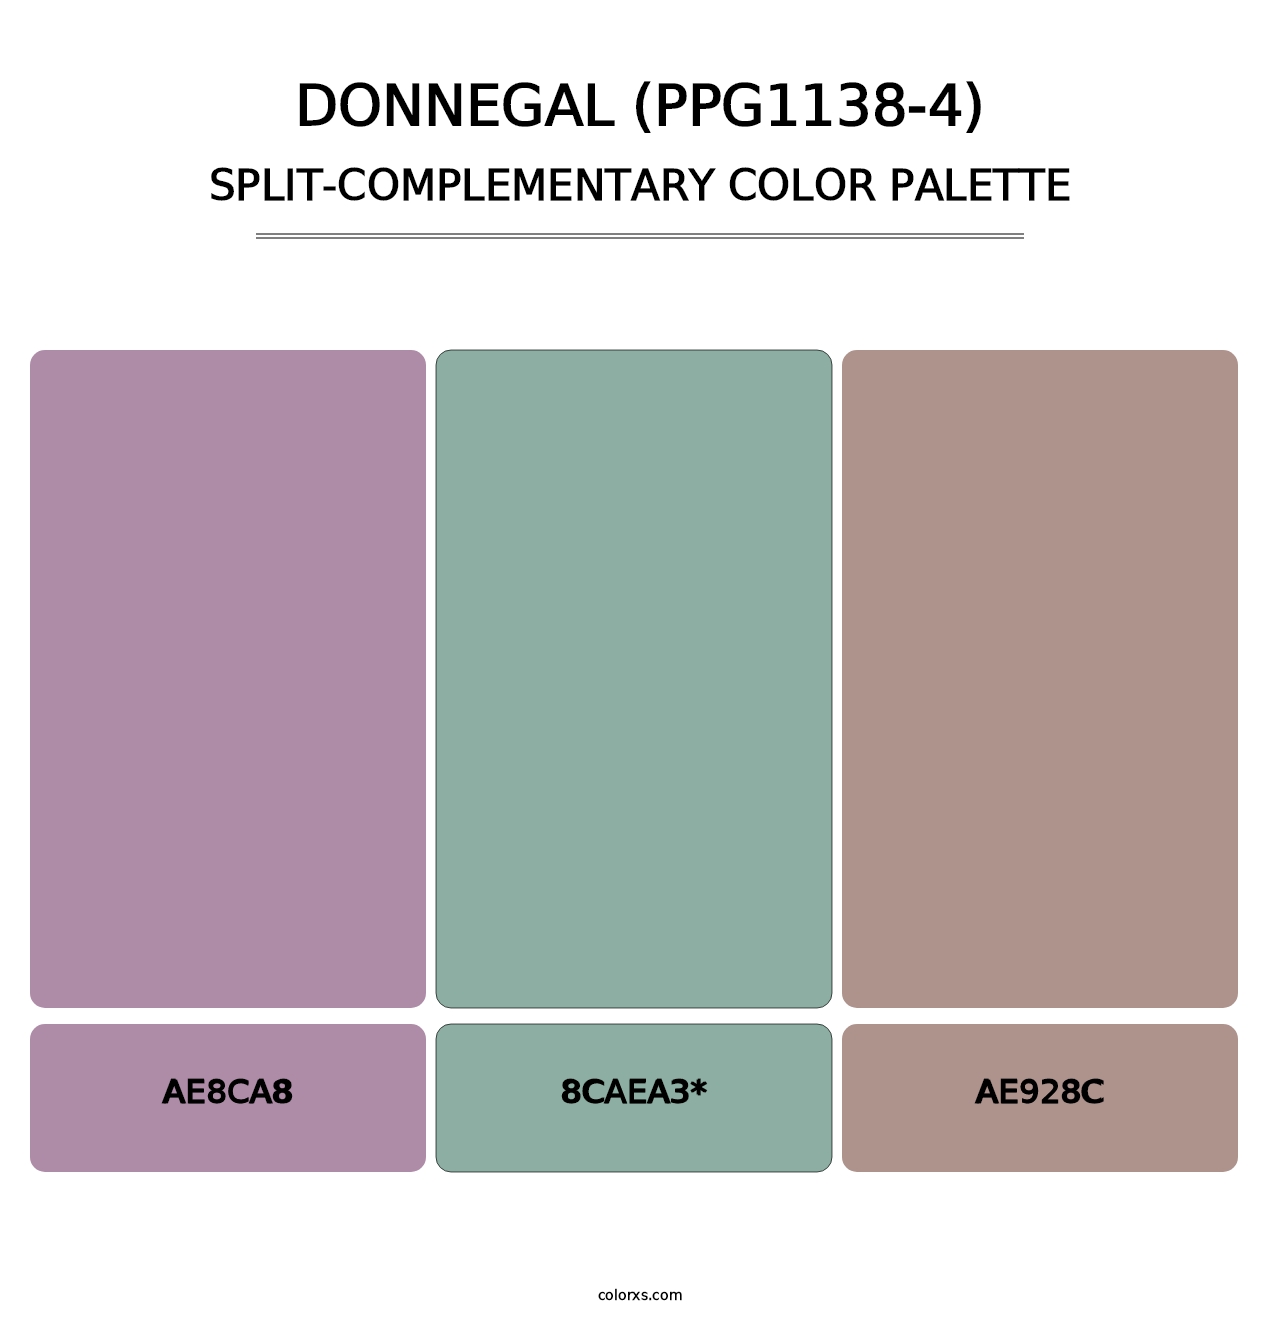 Donnegal (PPG1138-4) - Split-Complementary Color Palette